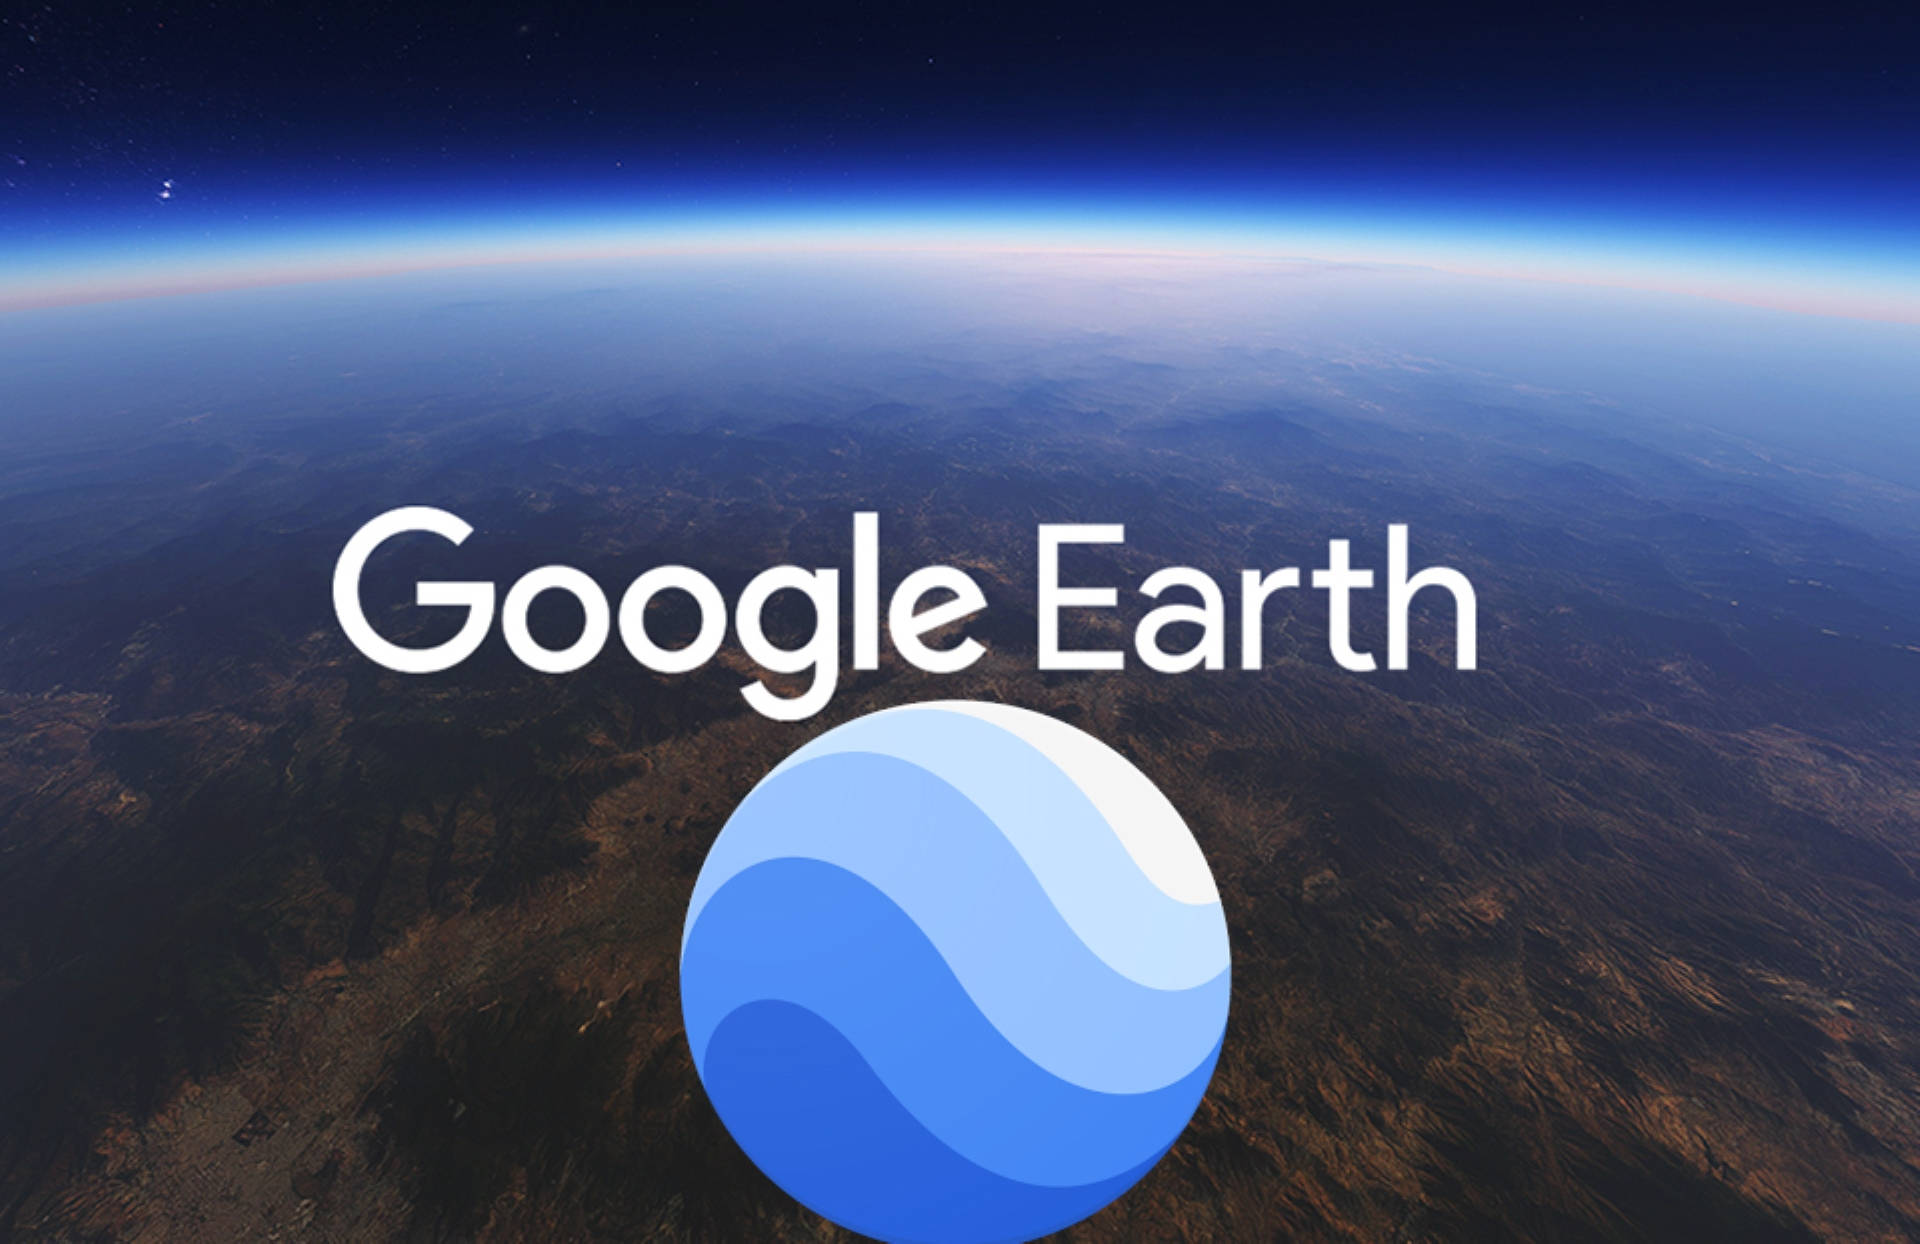 Google Earth Background Wallpaper